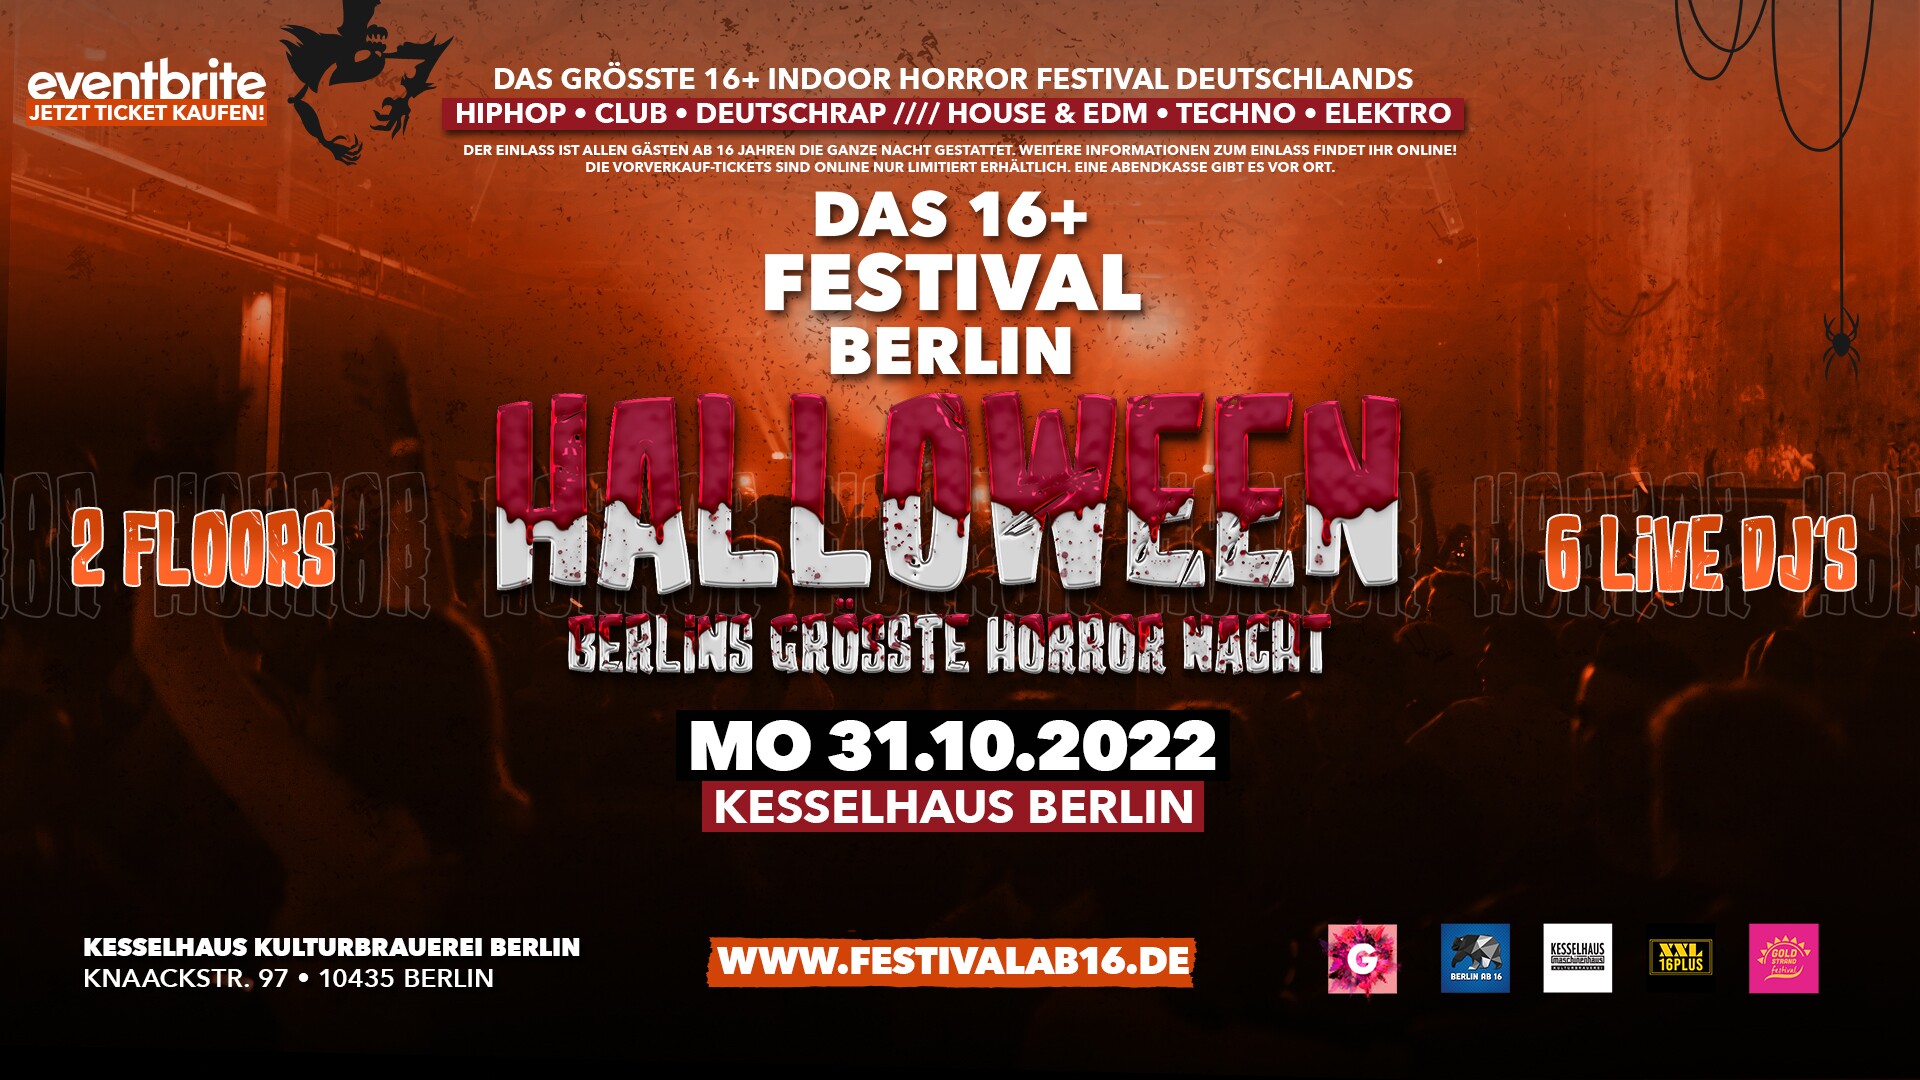 Kesselhaus Berlin Eventflyer #1 vom 31.10.2022